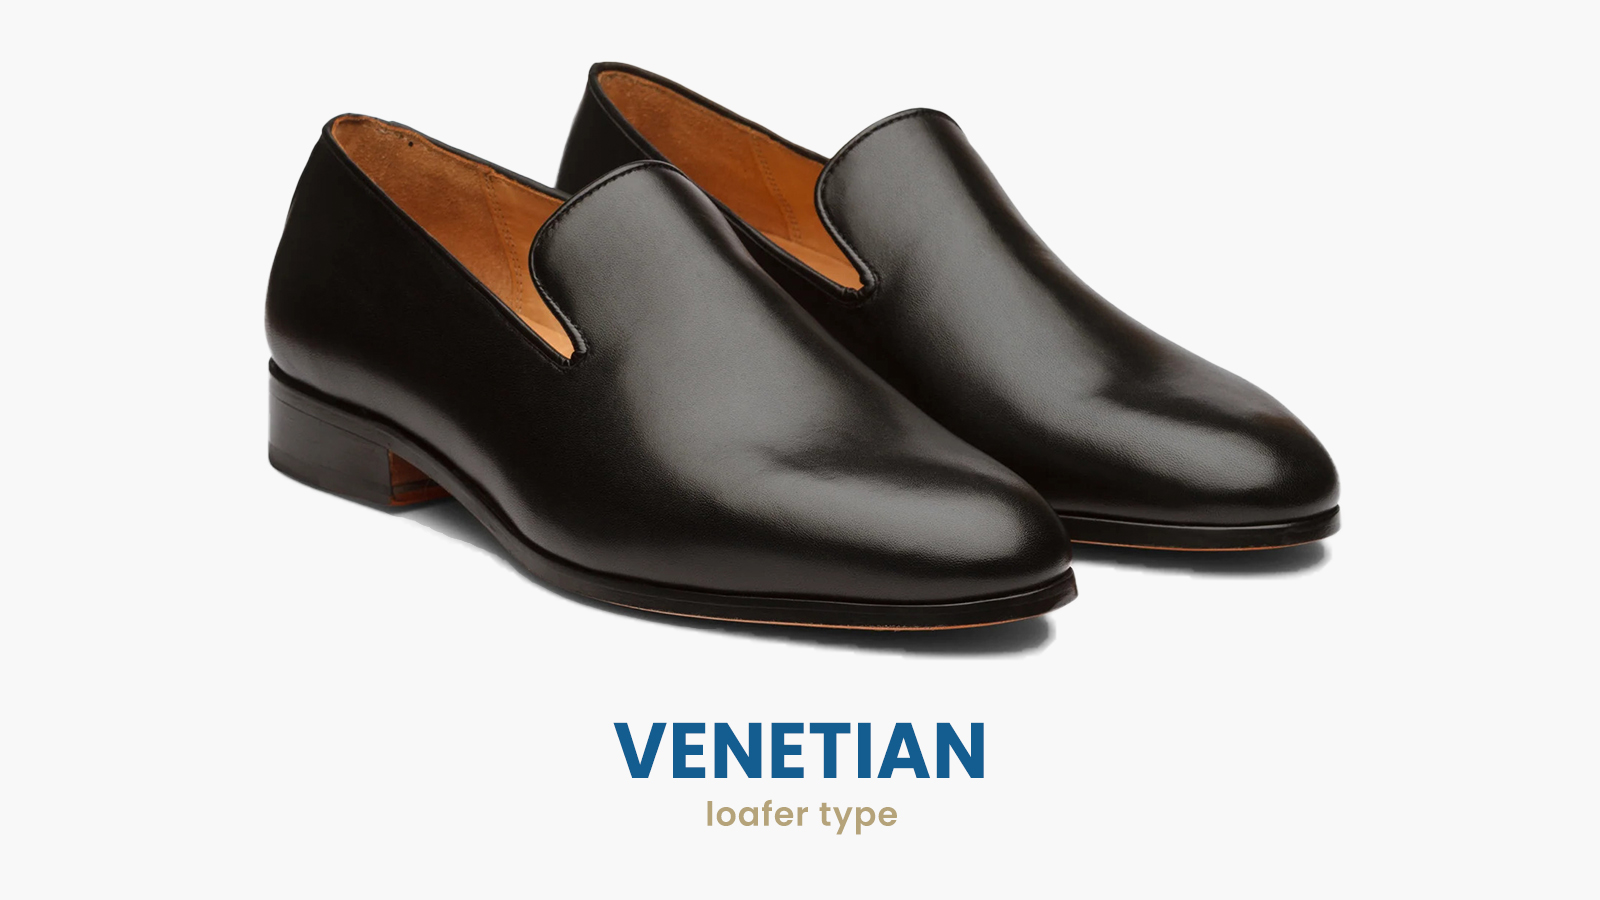 Venetian loafer type